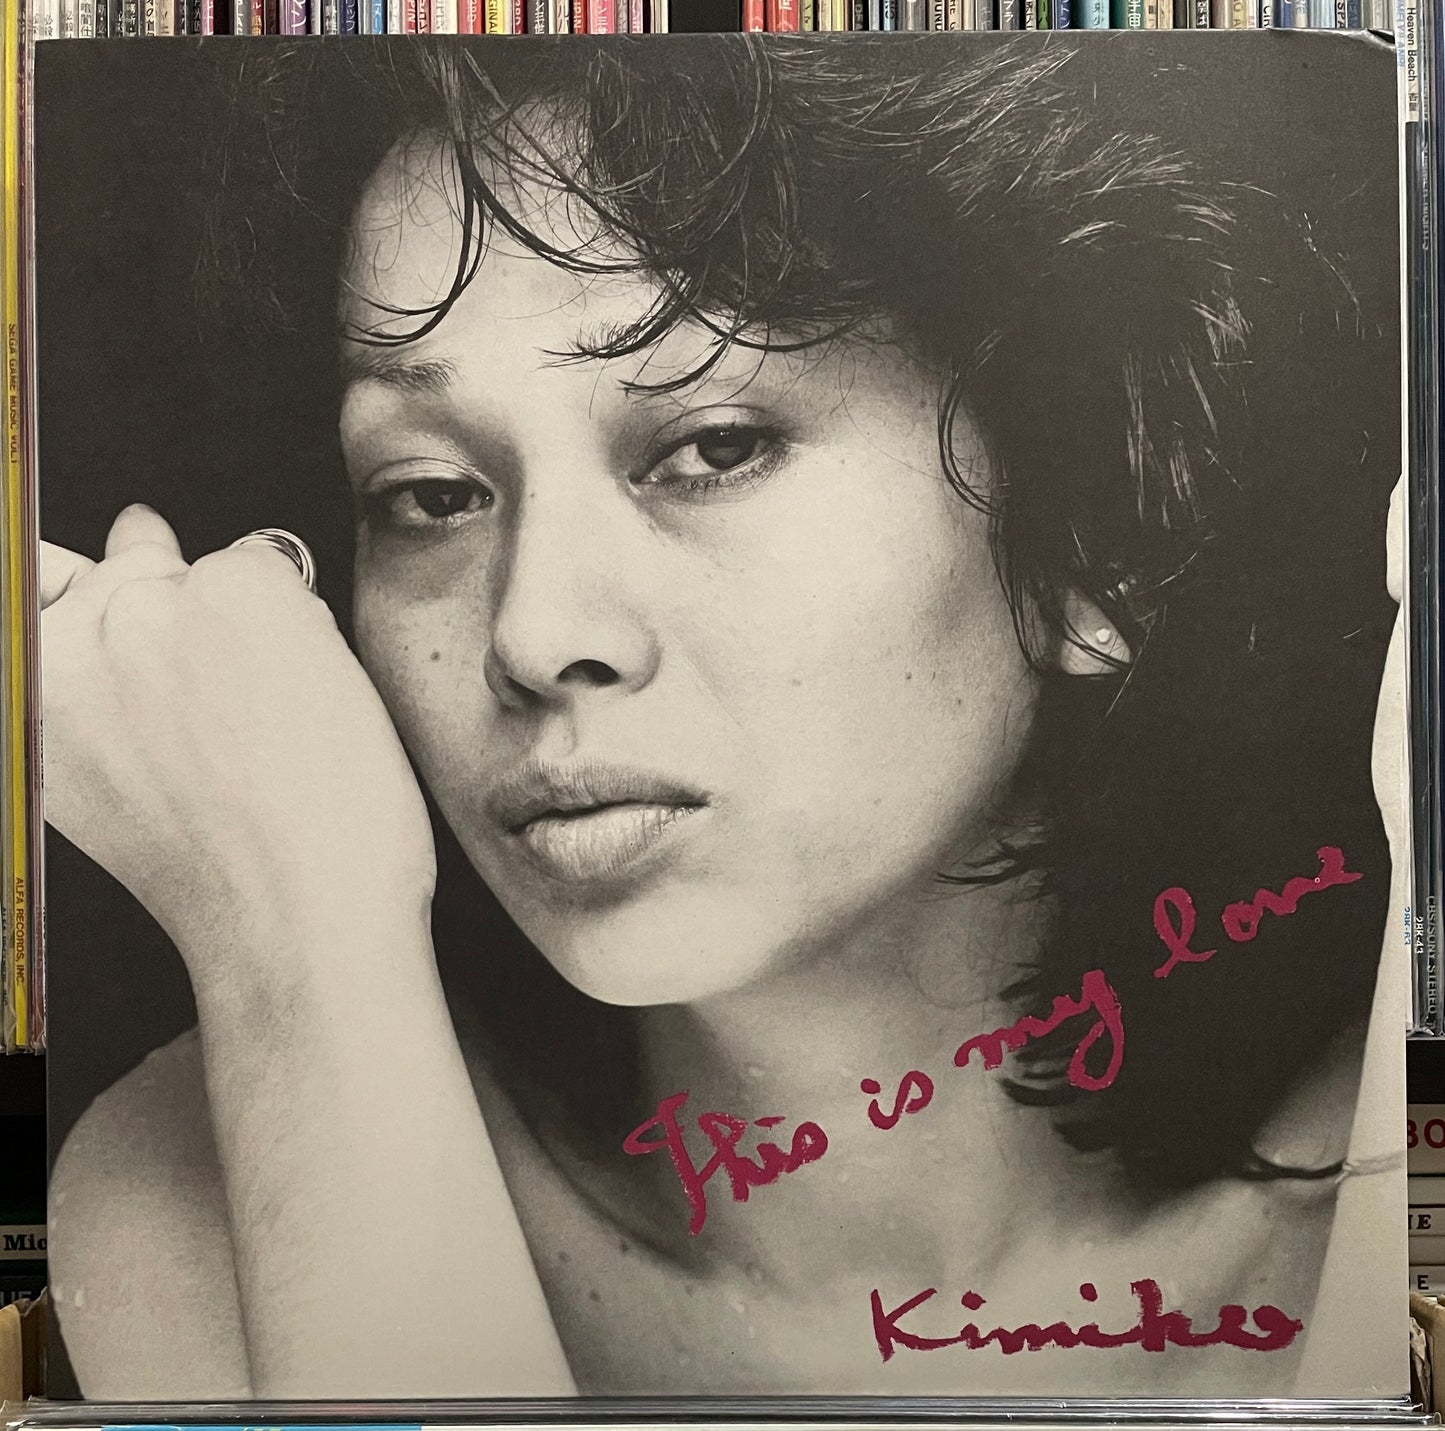 Kimiko Kasai “This Is My Love” (1975)